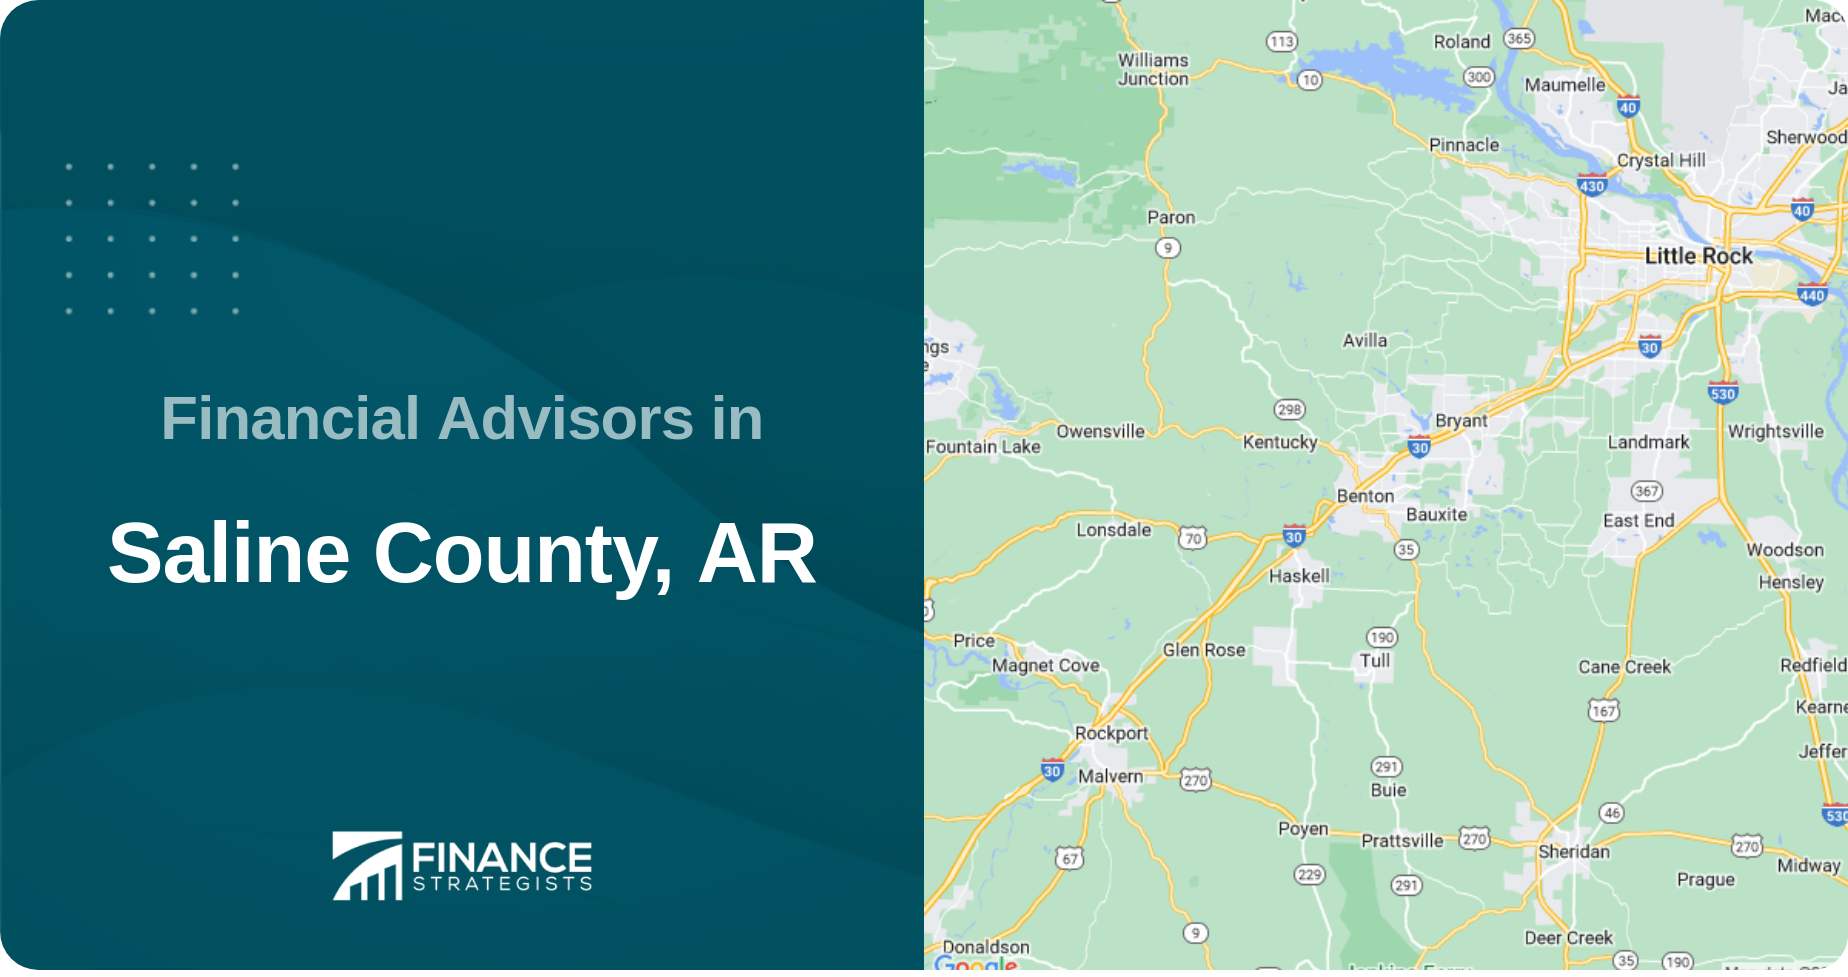 Financial Advisors in Saline County, AR